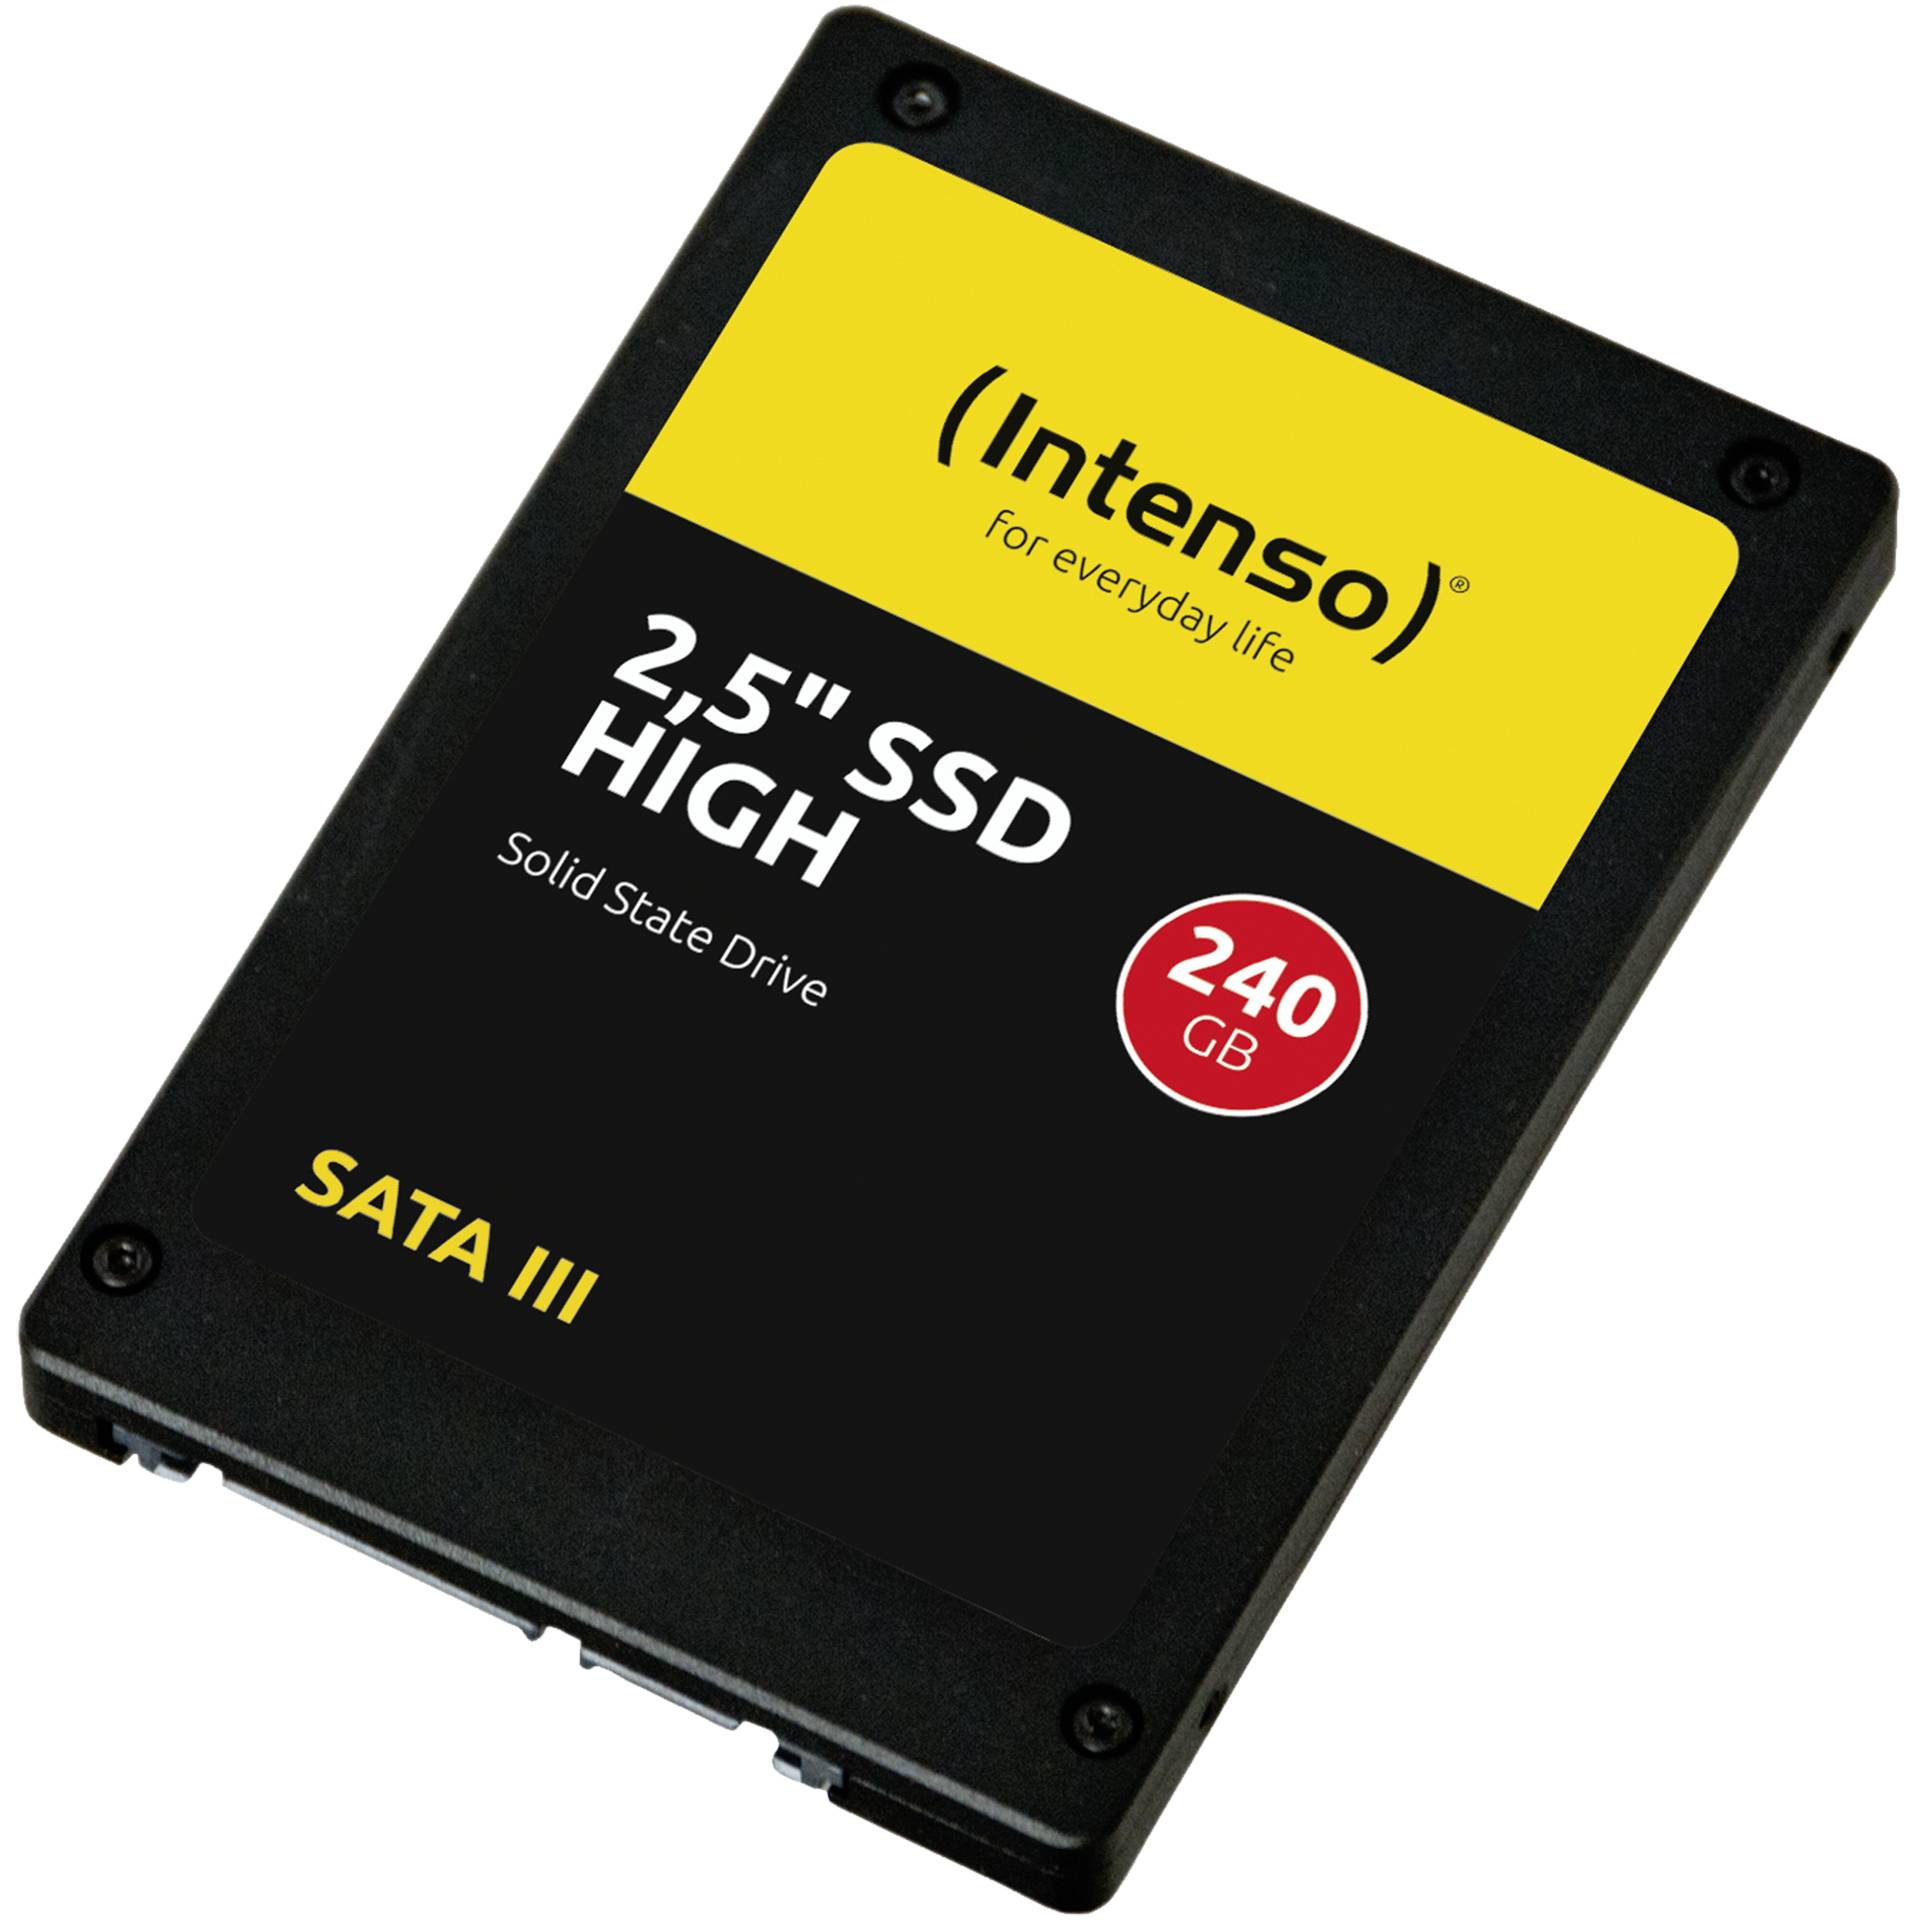 240 GB SSD Intenso High Performance SATA 6Gb/s 2.5 Zoll lesen: 520MB/s, schreiben: 480MB/s